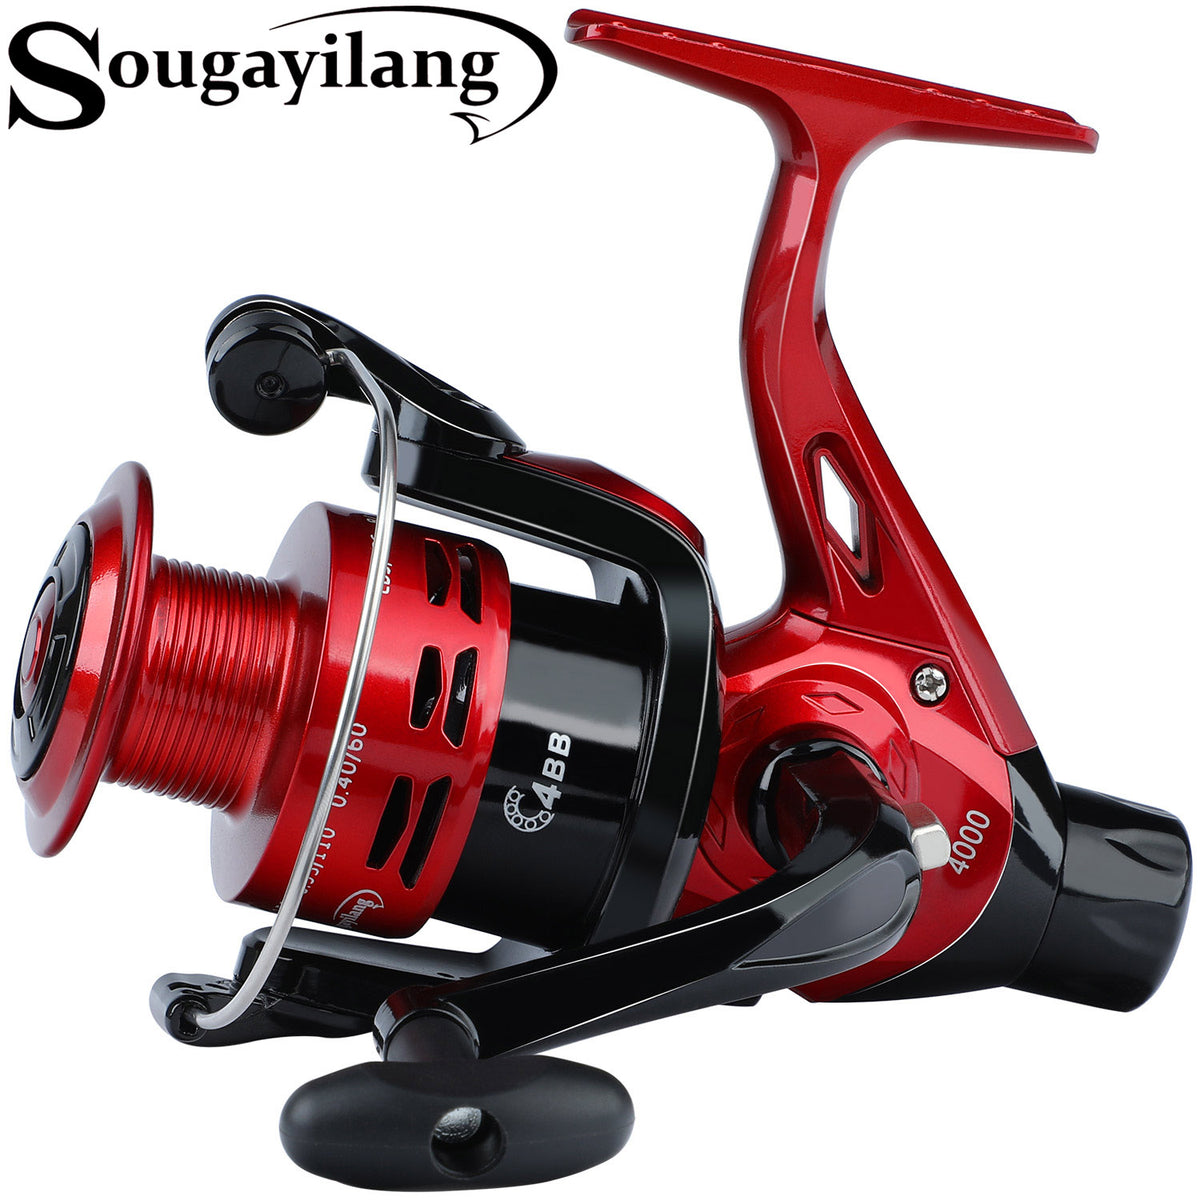 Sougayilang New Spinning Carp Fishing Reels 4000 Series Fishing Wheel